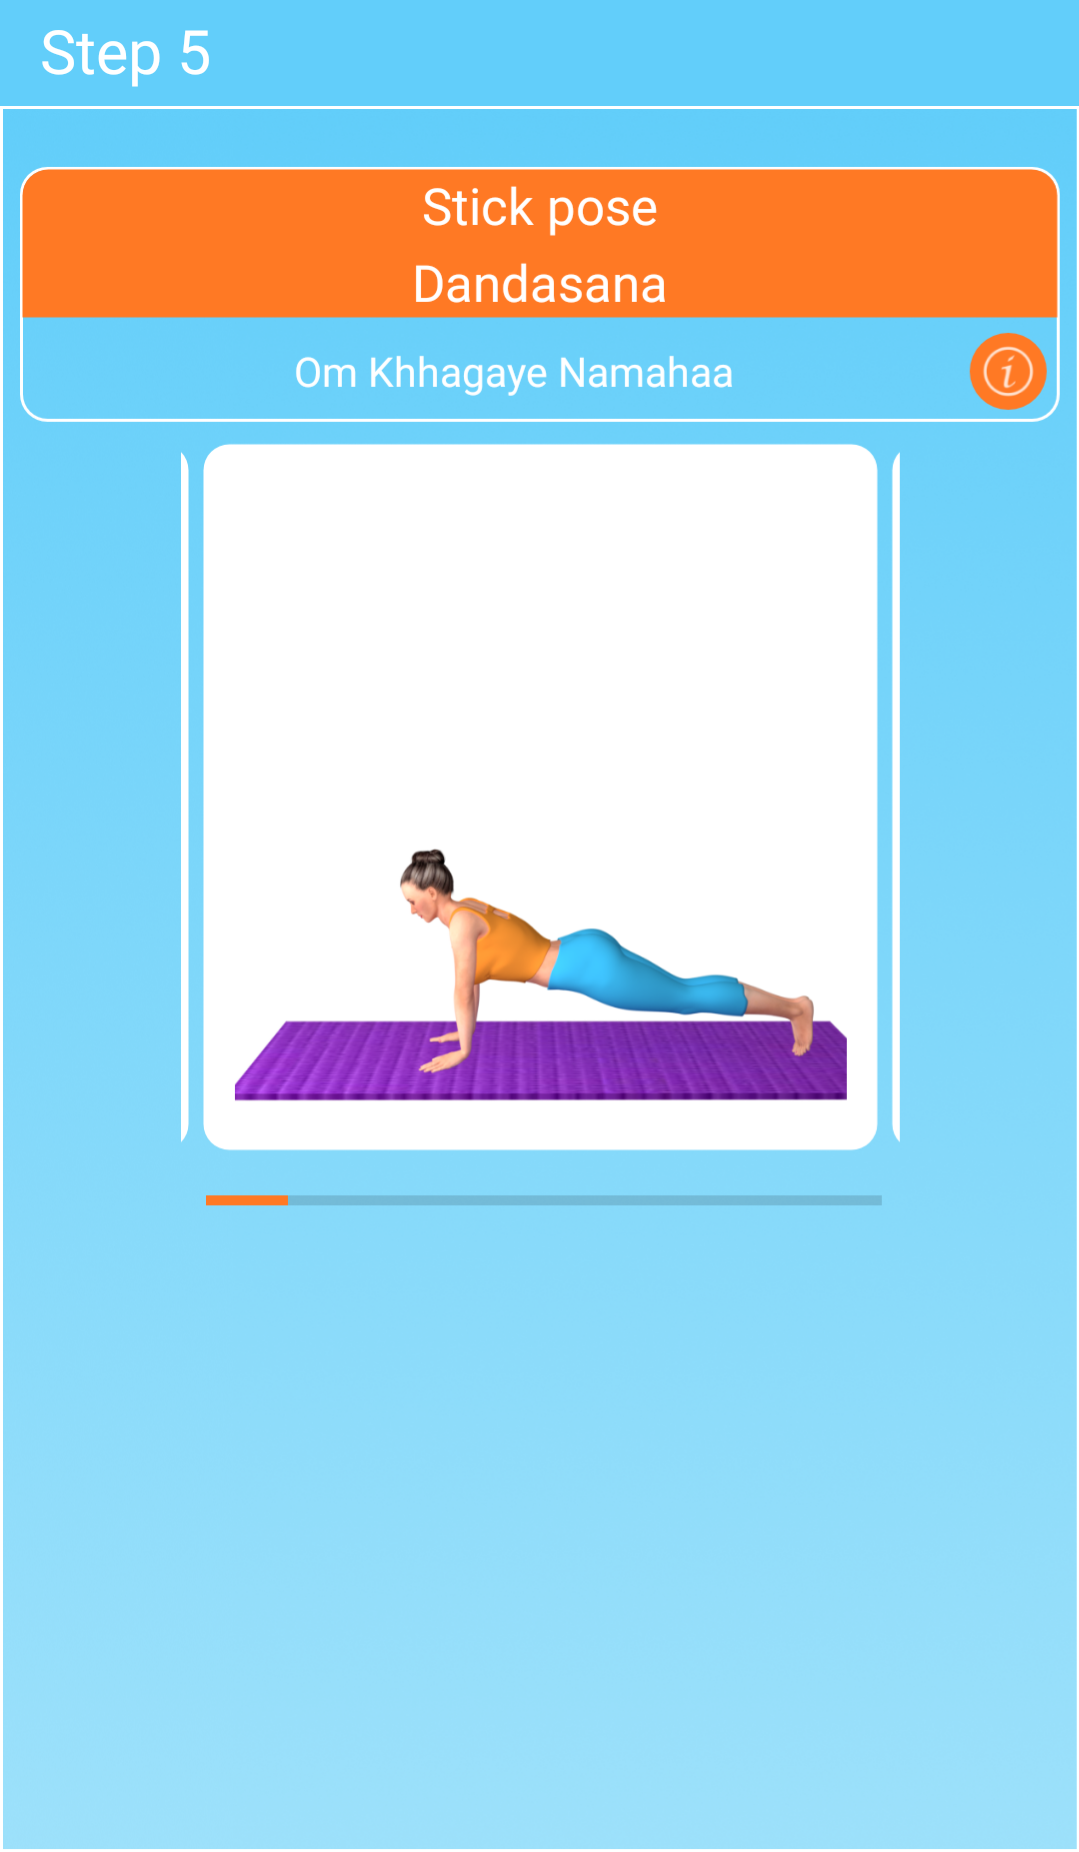 SunUps yoga app teaches sun salutations or surya namaskar